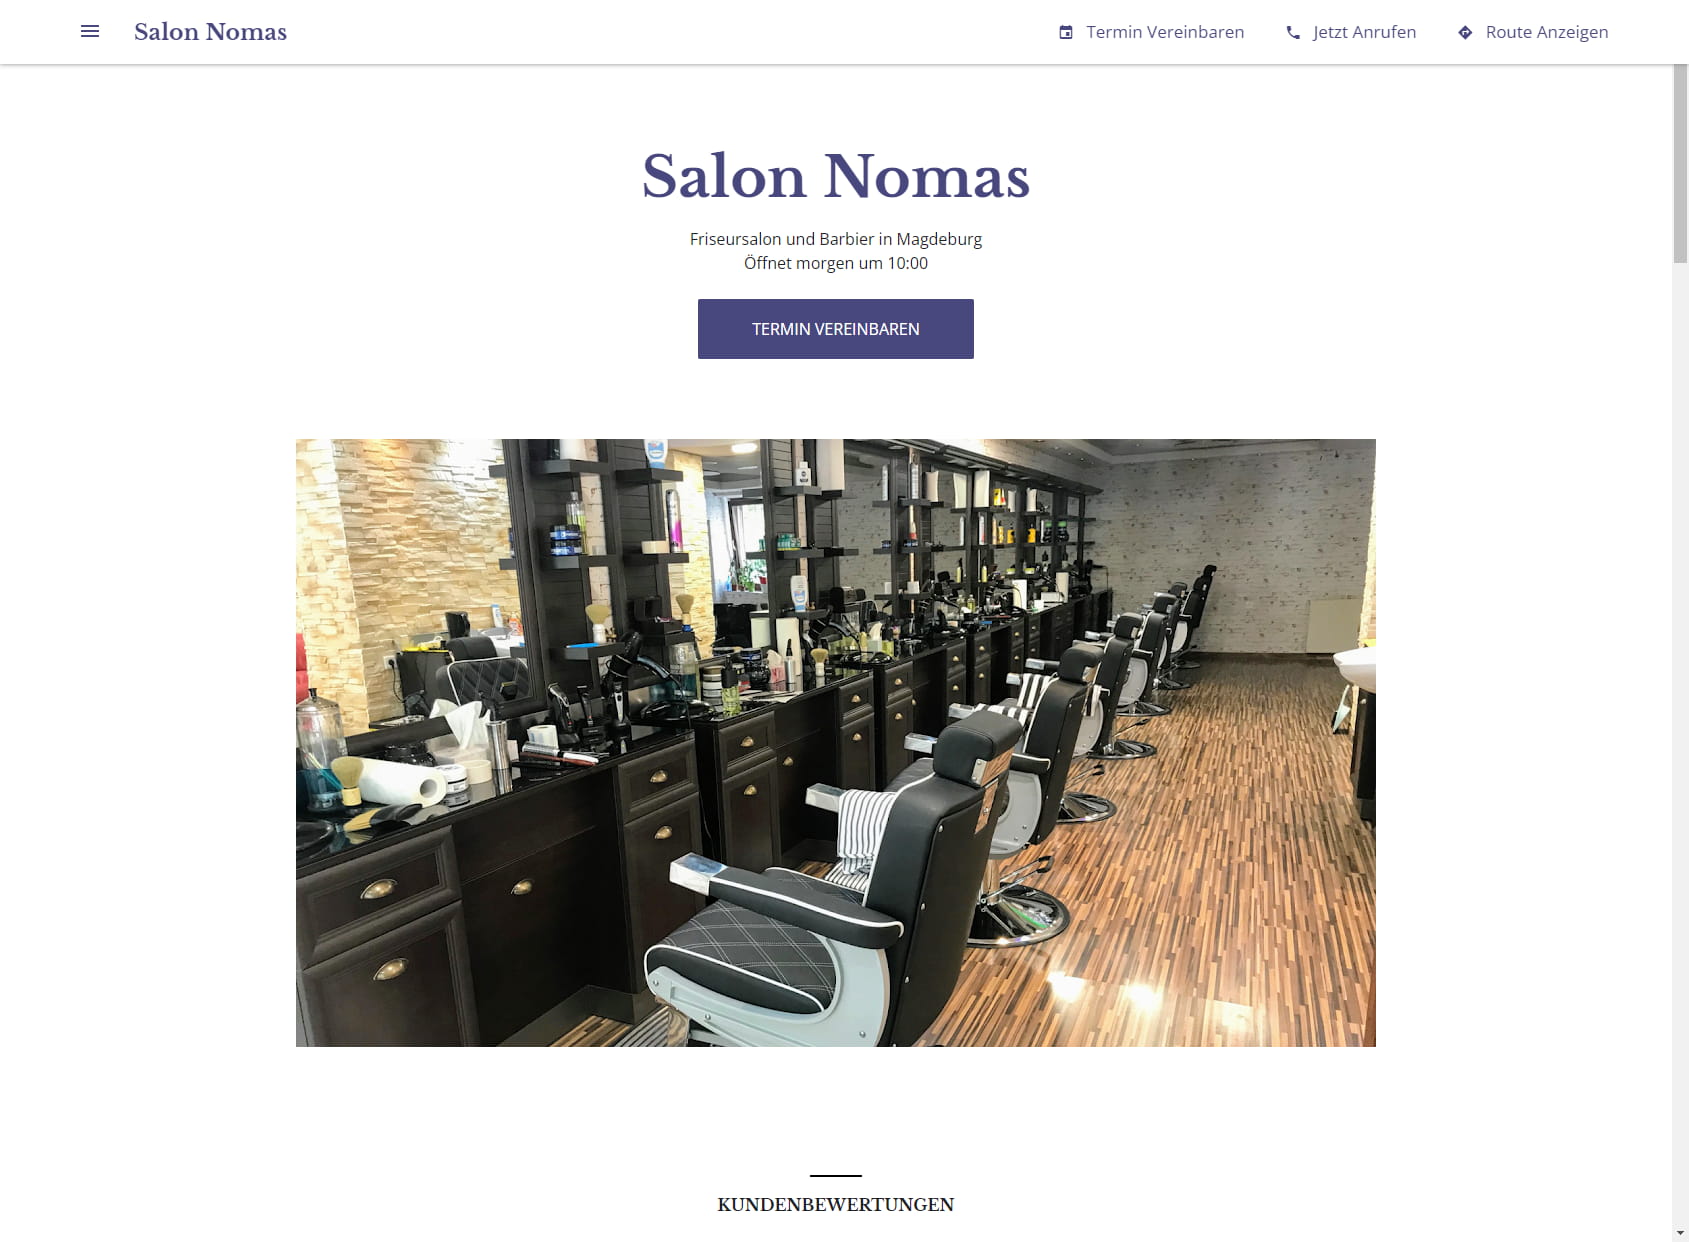 Salon Nomas